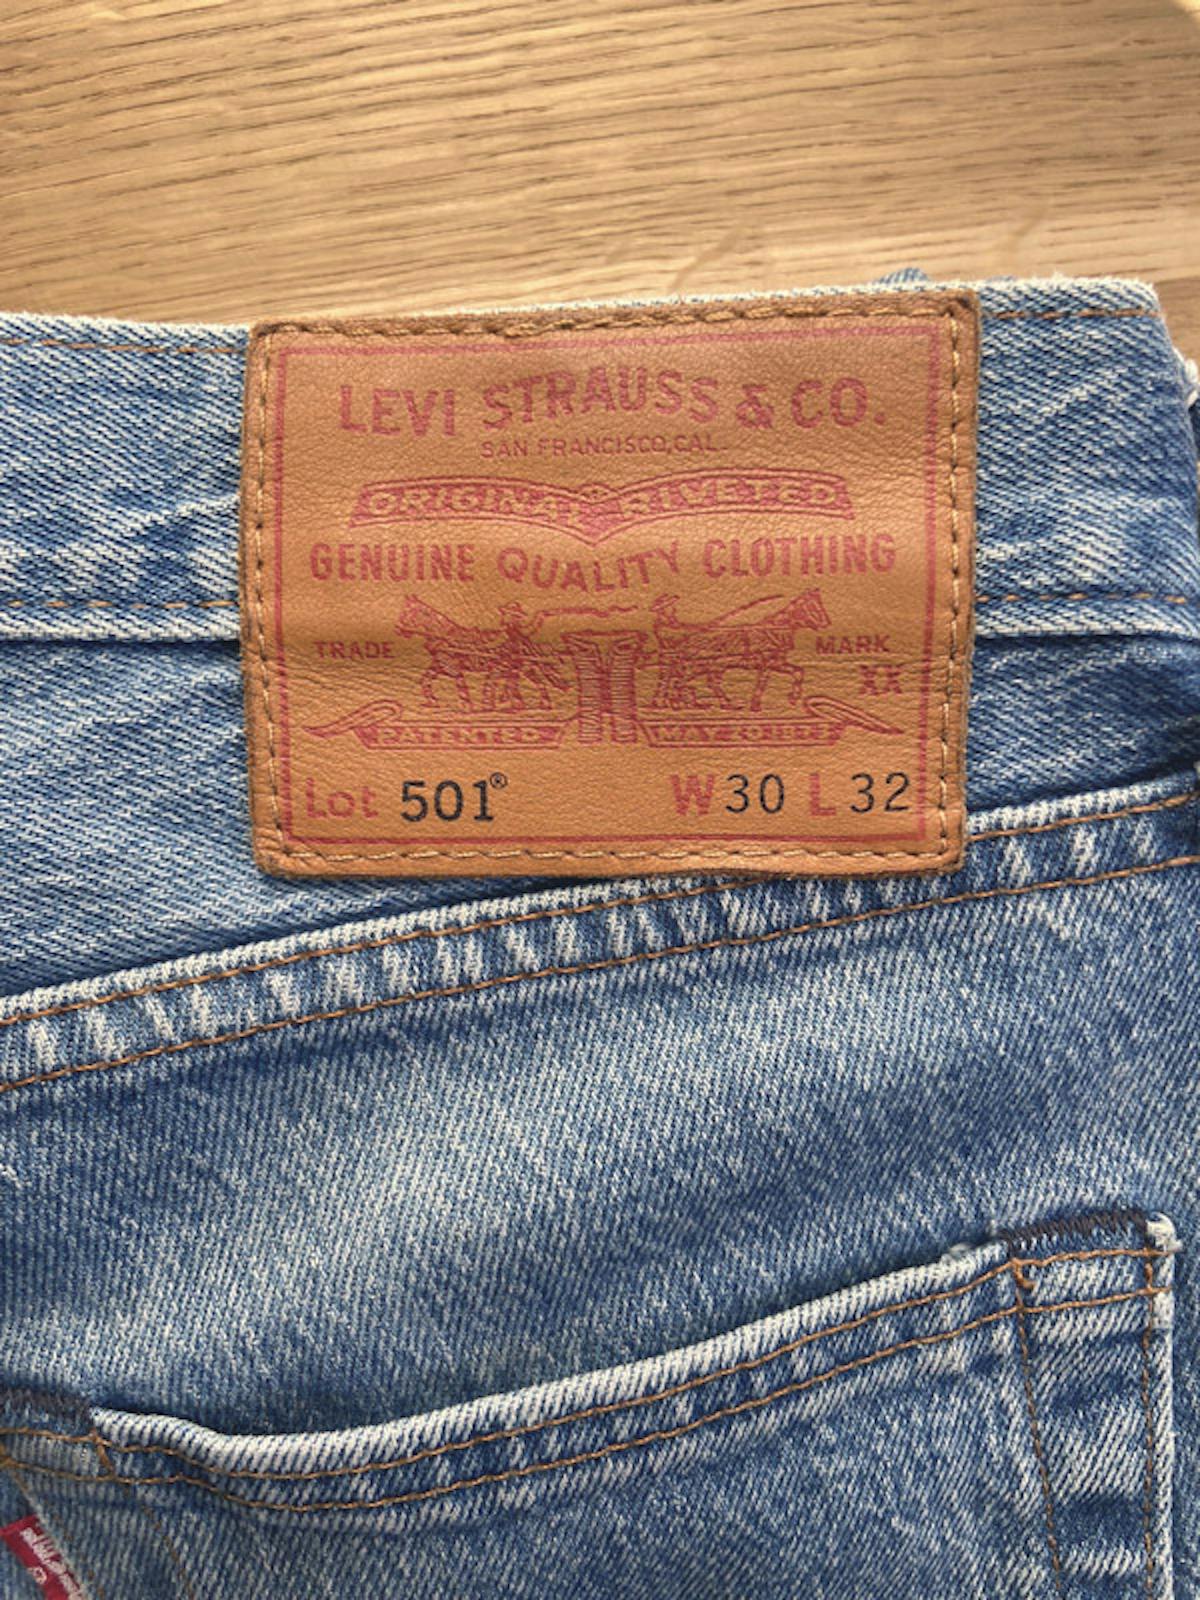 Etiquetas emblemáticas: Levi Strauss | Dutch Label Shop - ES